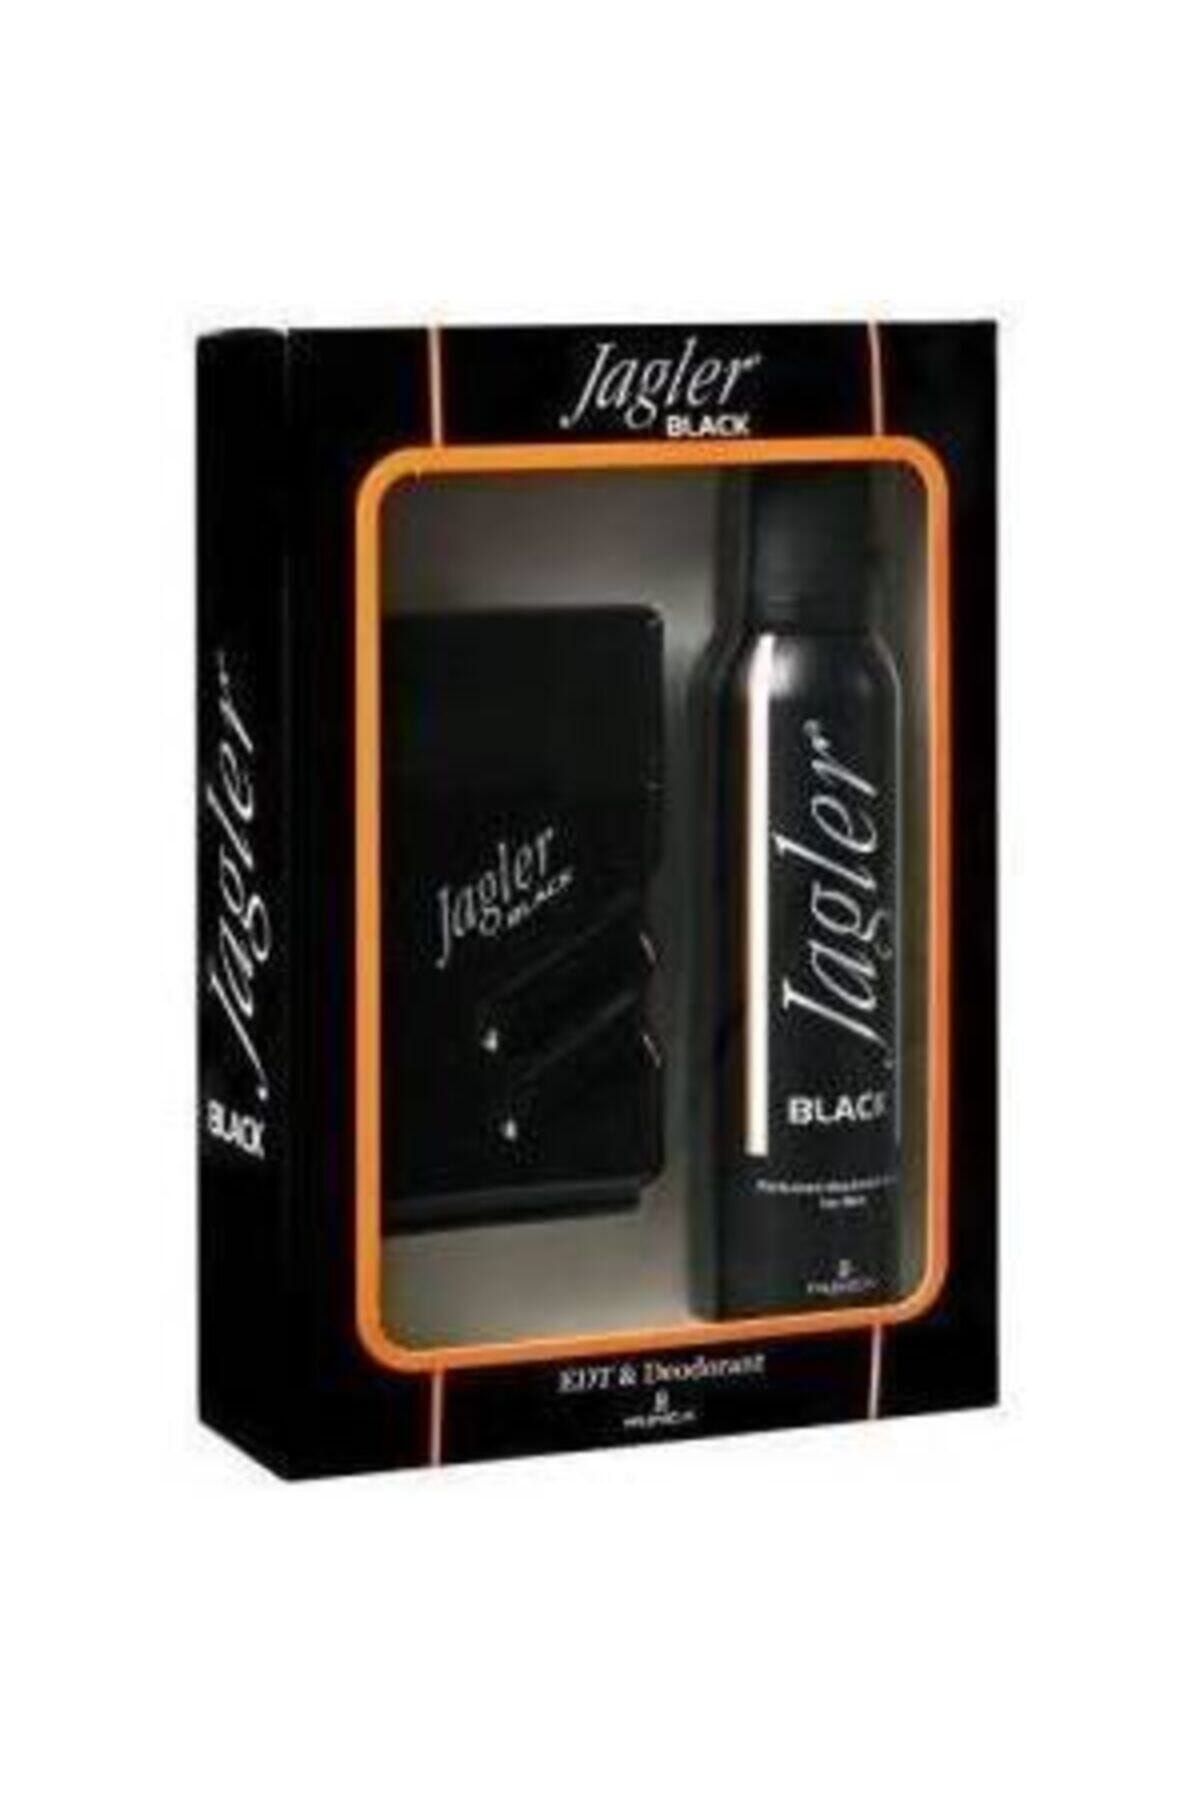 Jagler Black Edt 90 ml Erkek Parfüm +Deodorant Set YLDZTCRTSY-BRKD-5615